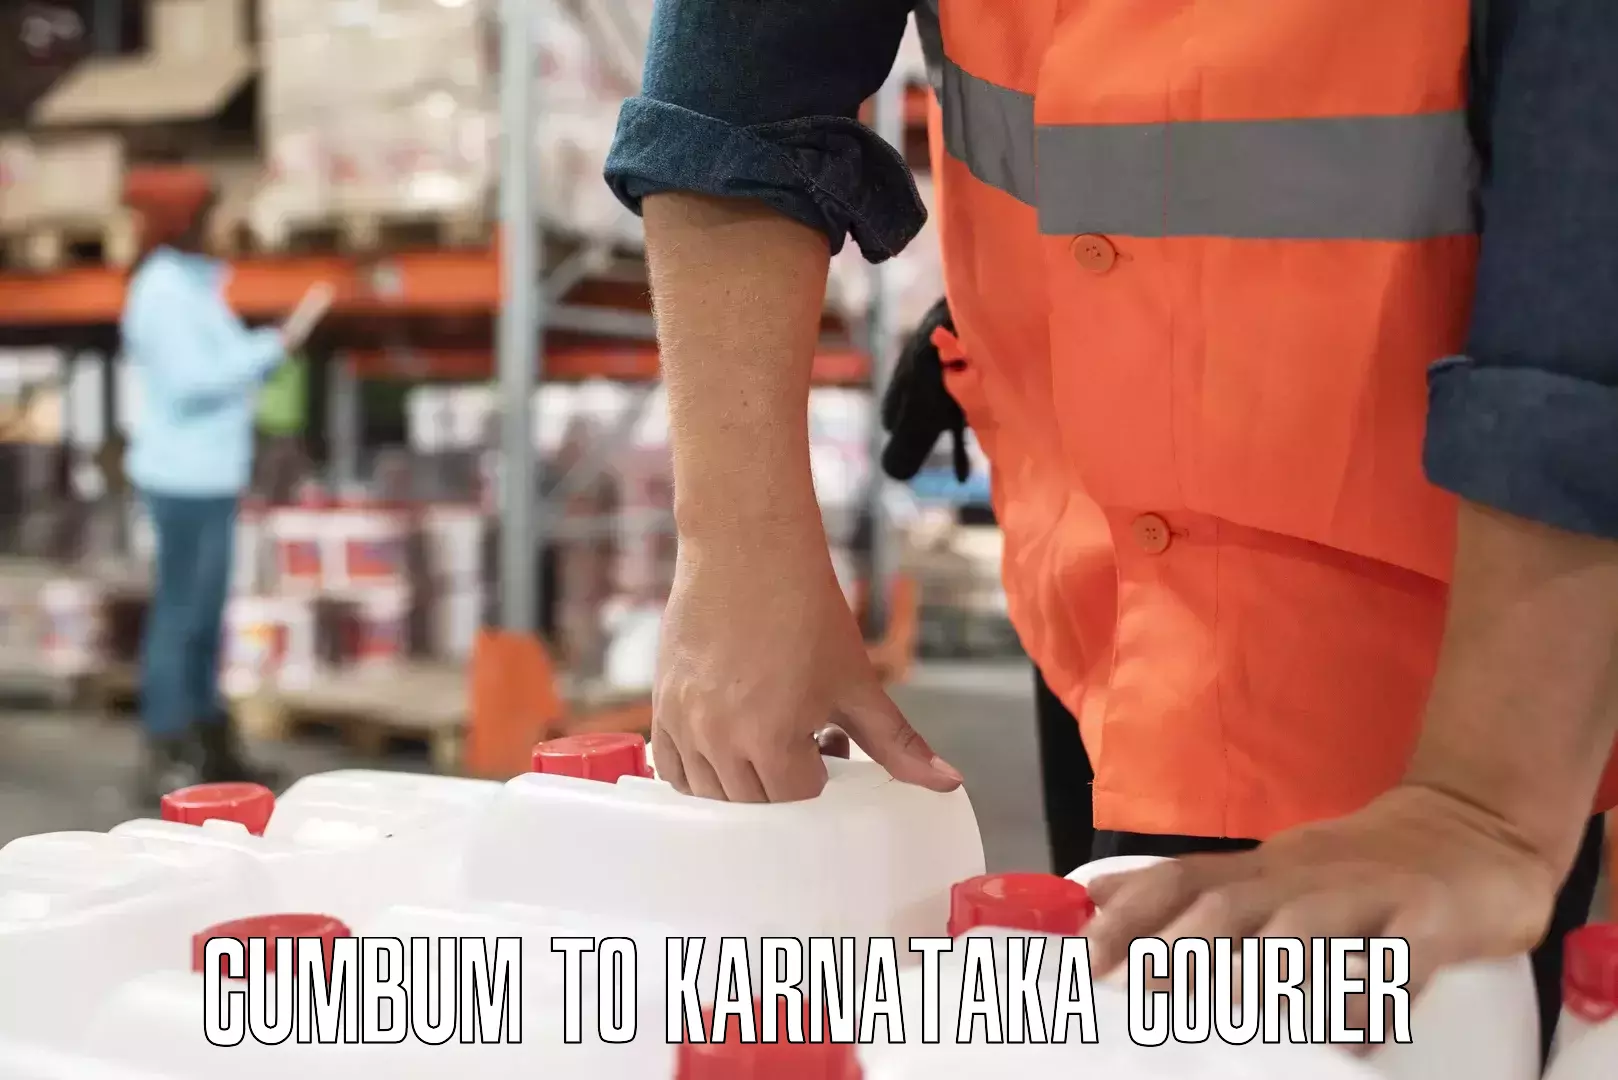 Nationwide shipping capabilities in Cumbum to Karnataka